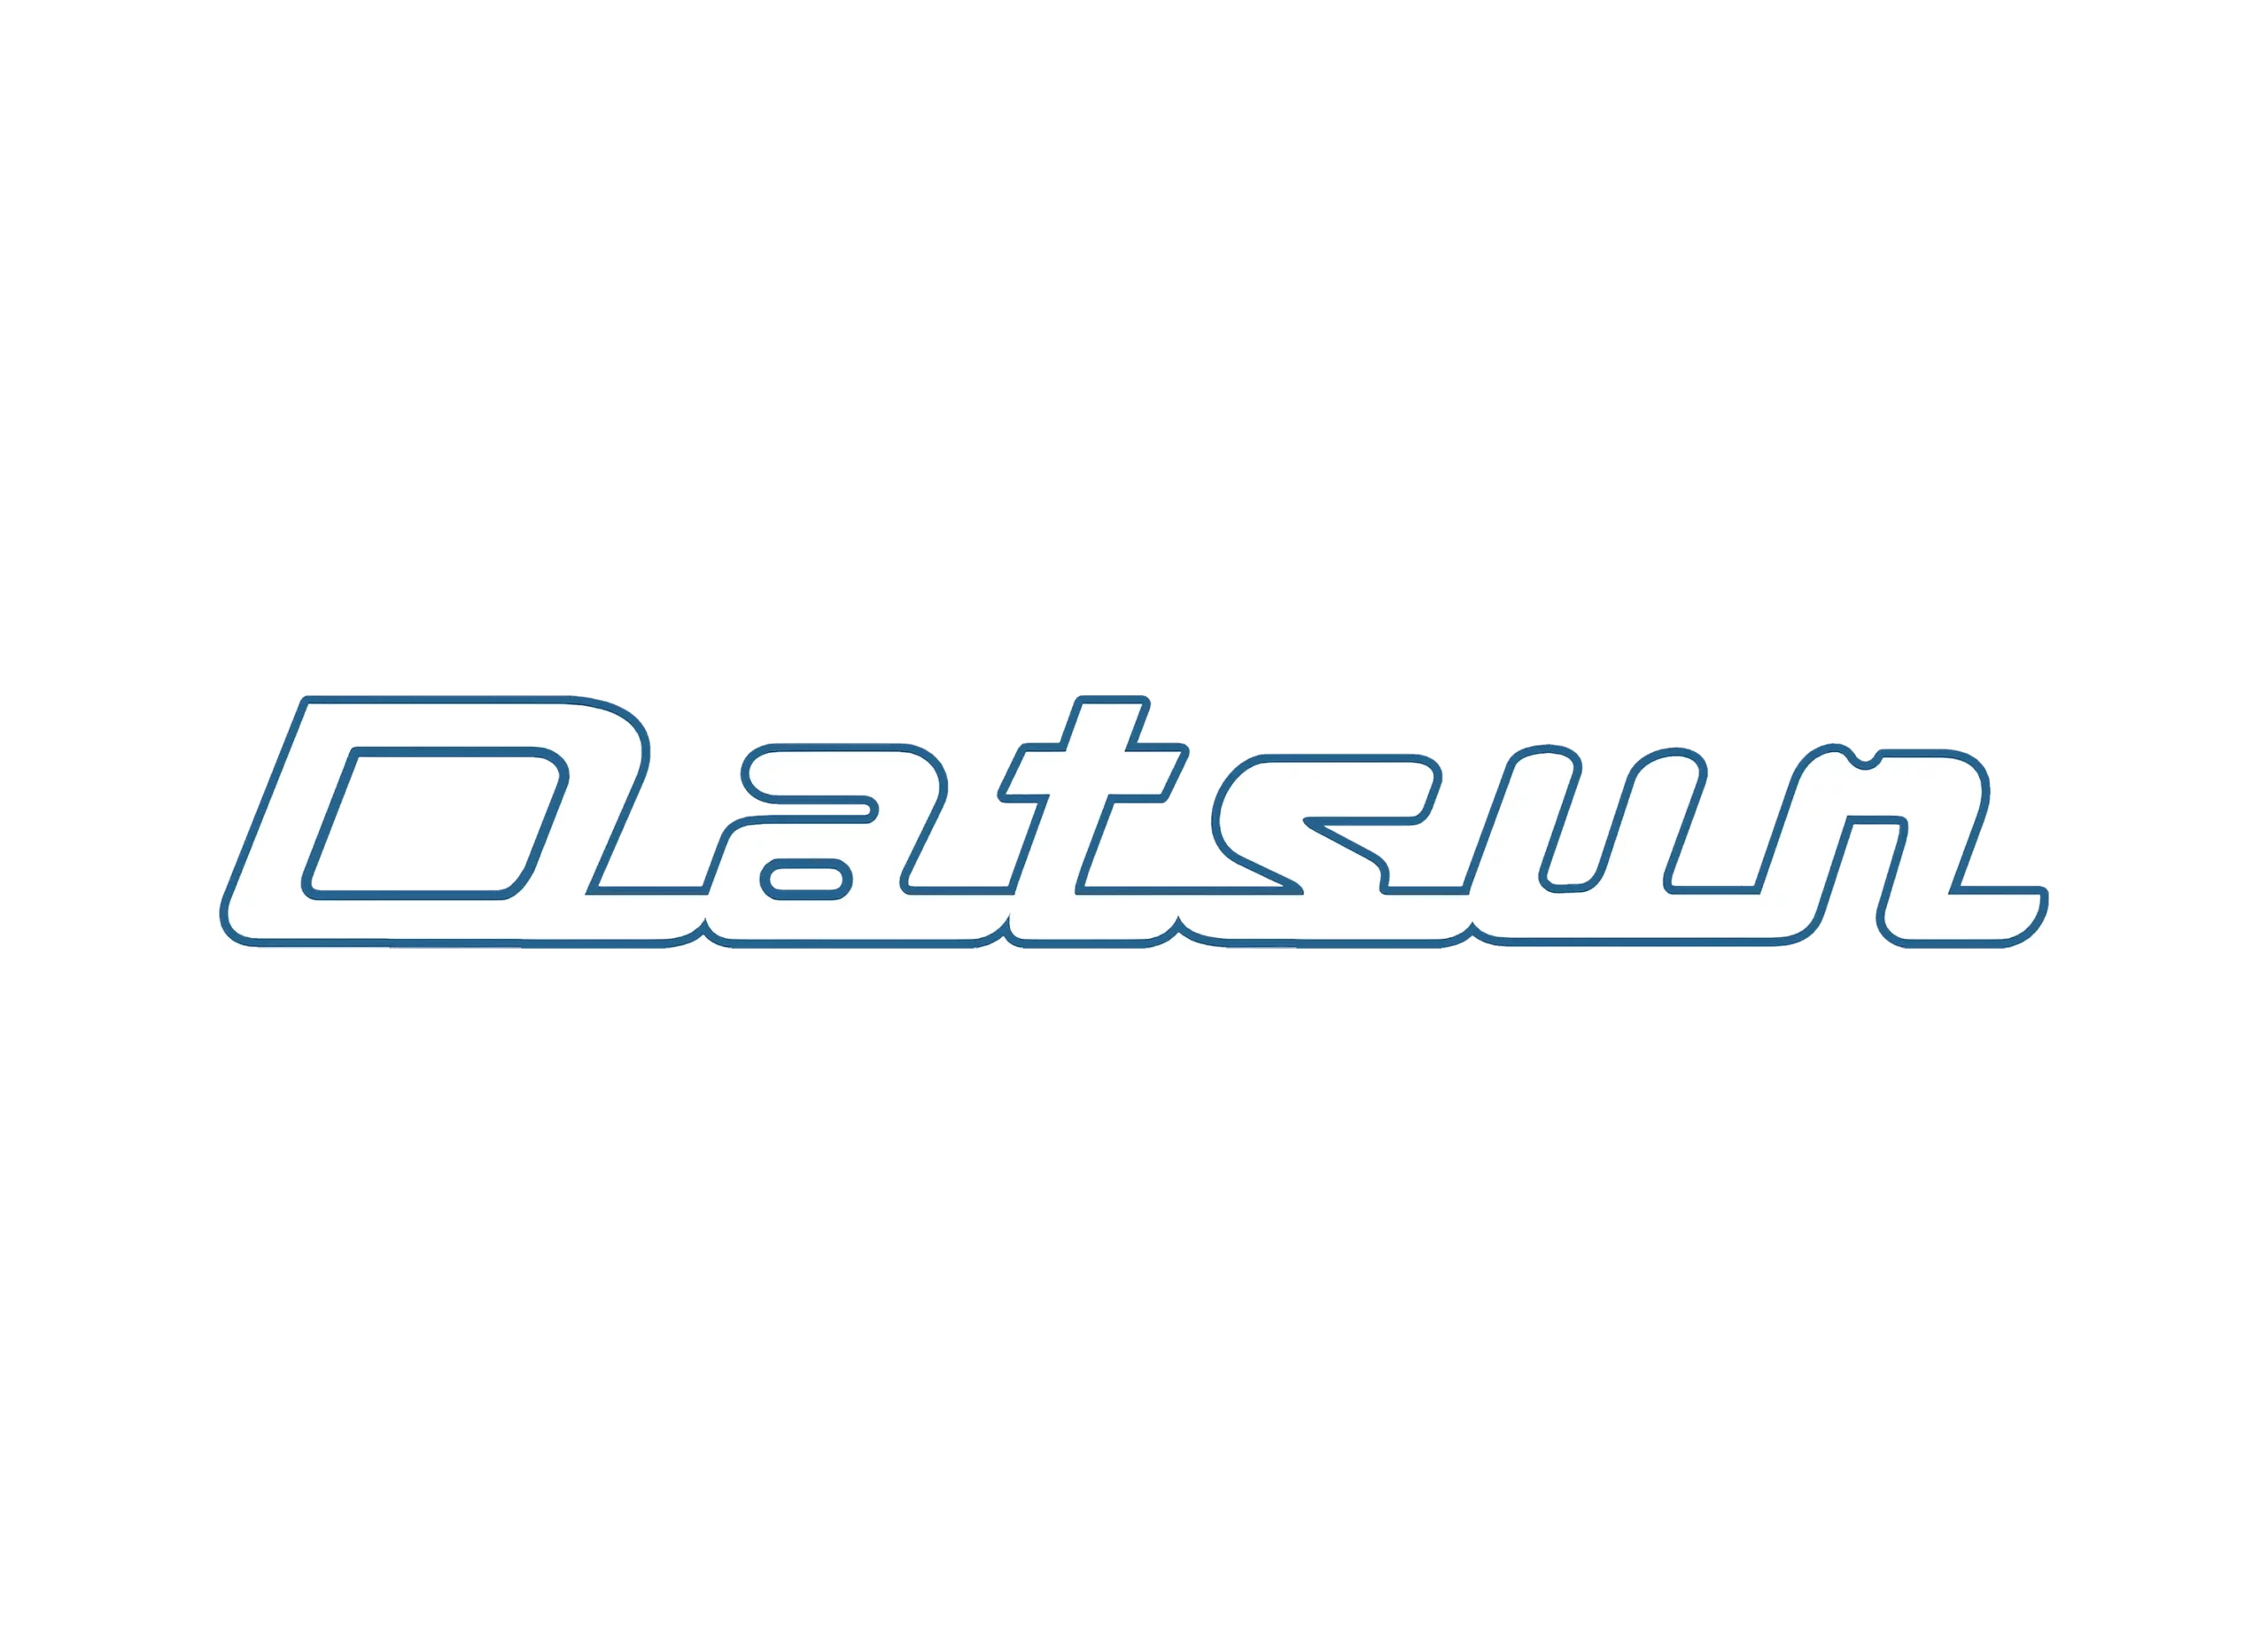 Datsun logo 1970